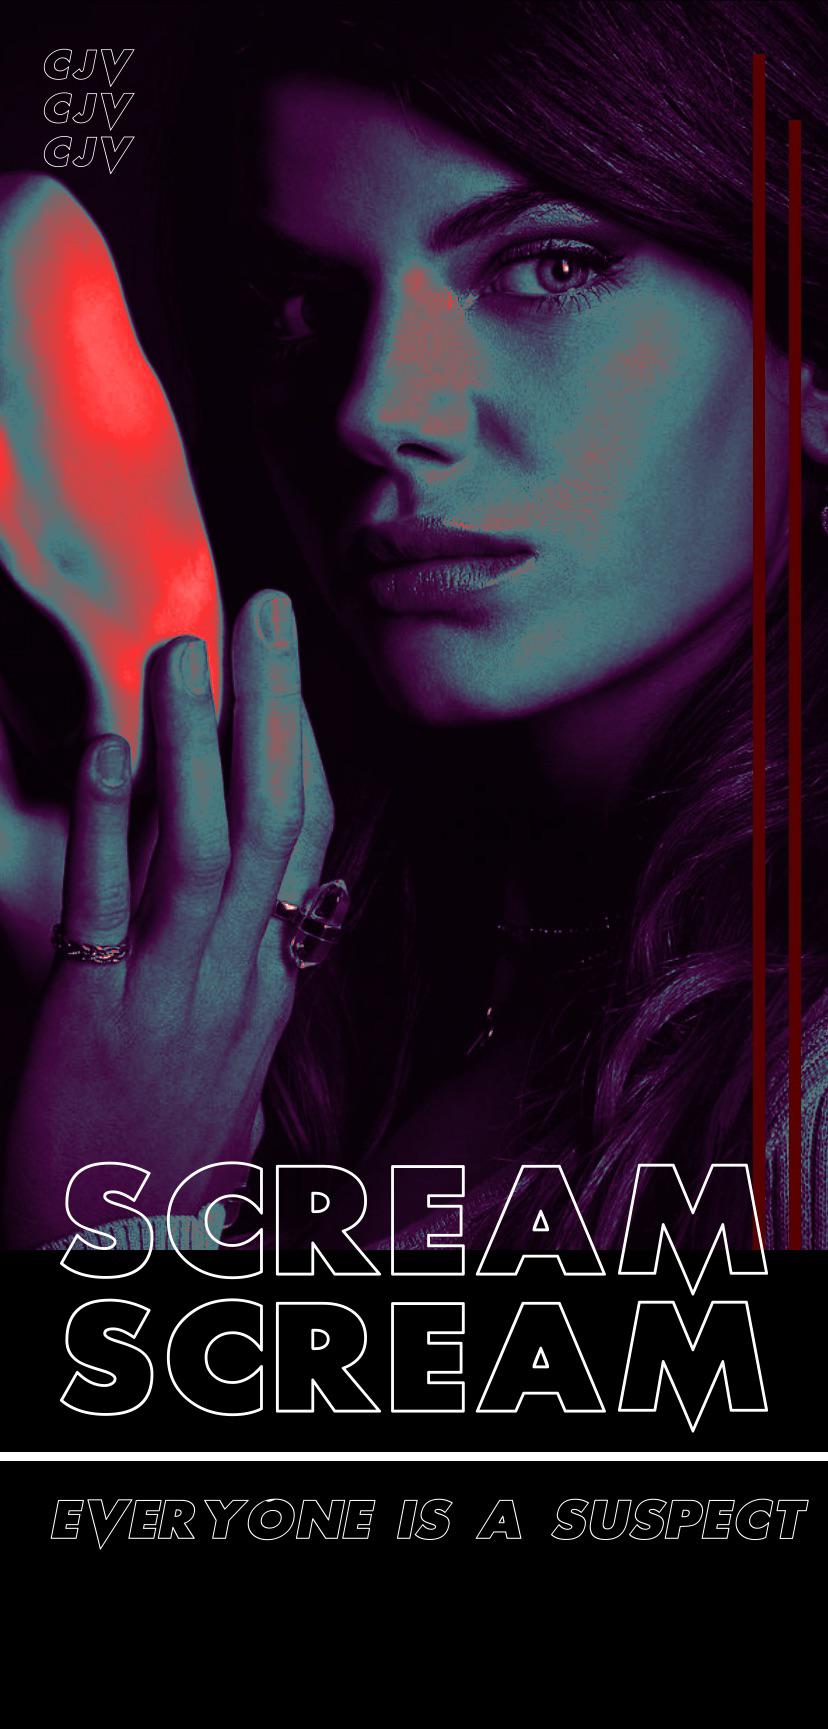 Scream (2022) Liv IPhone XR wallpaper (My edit)